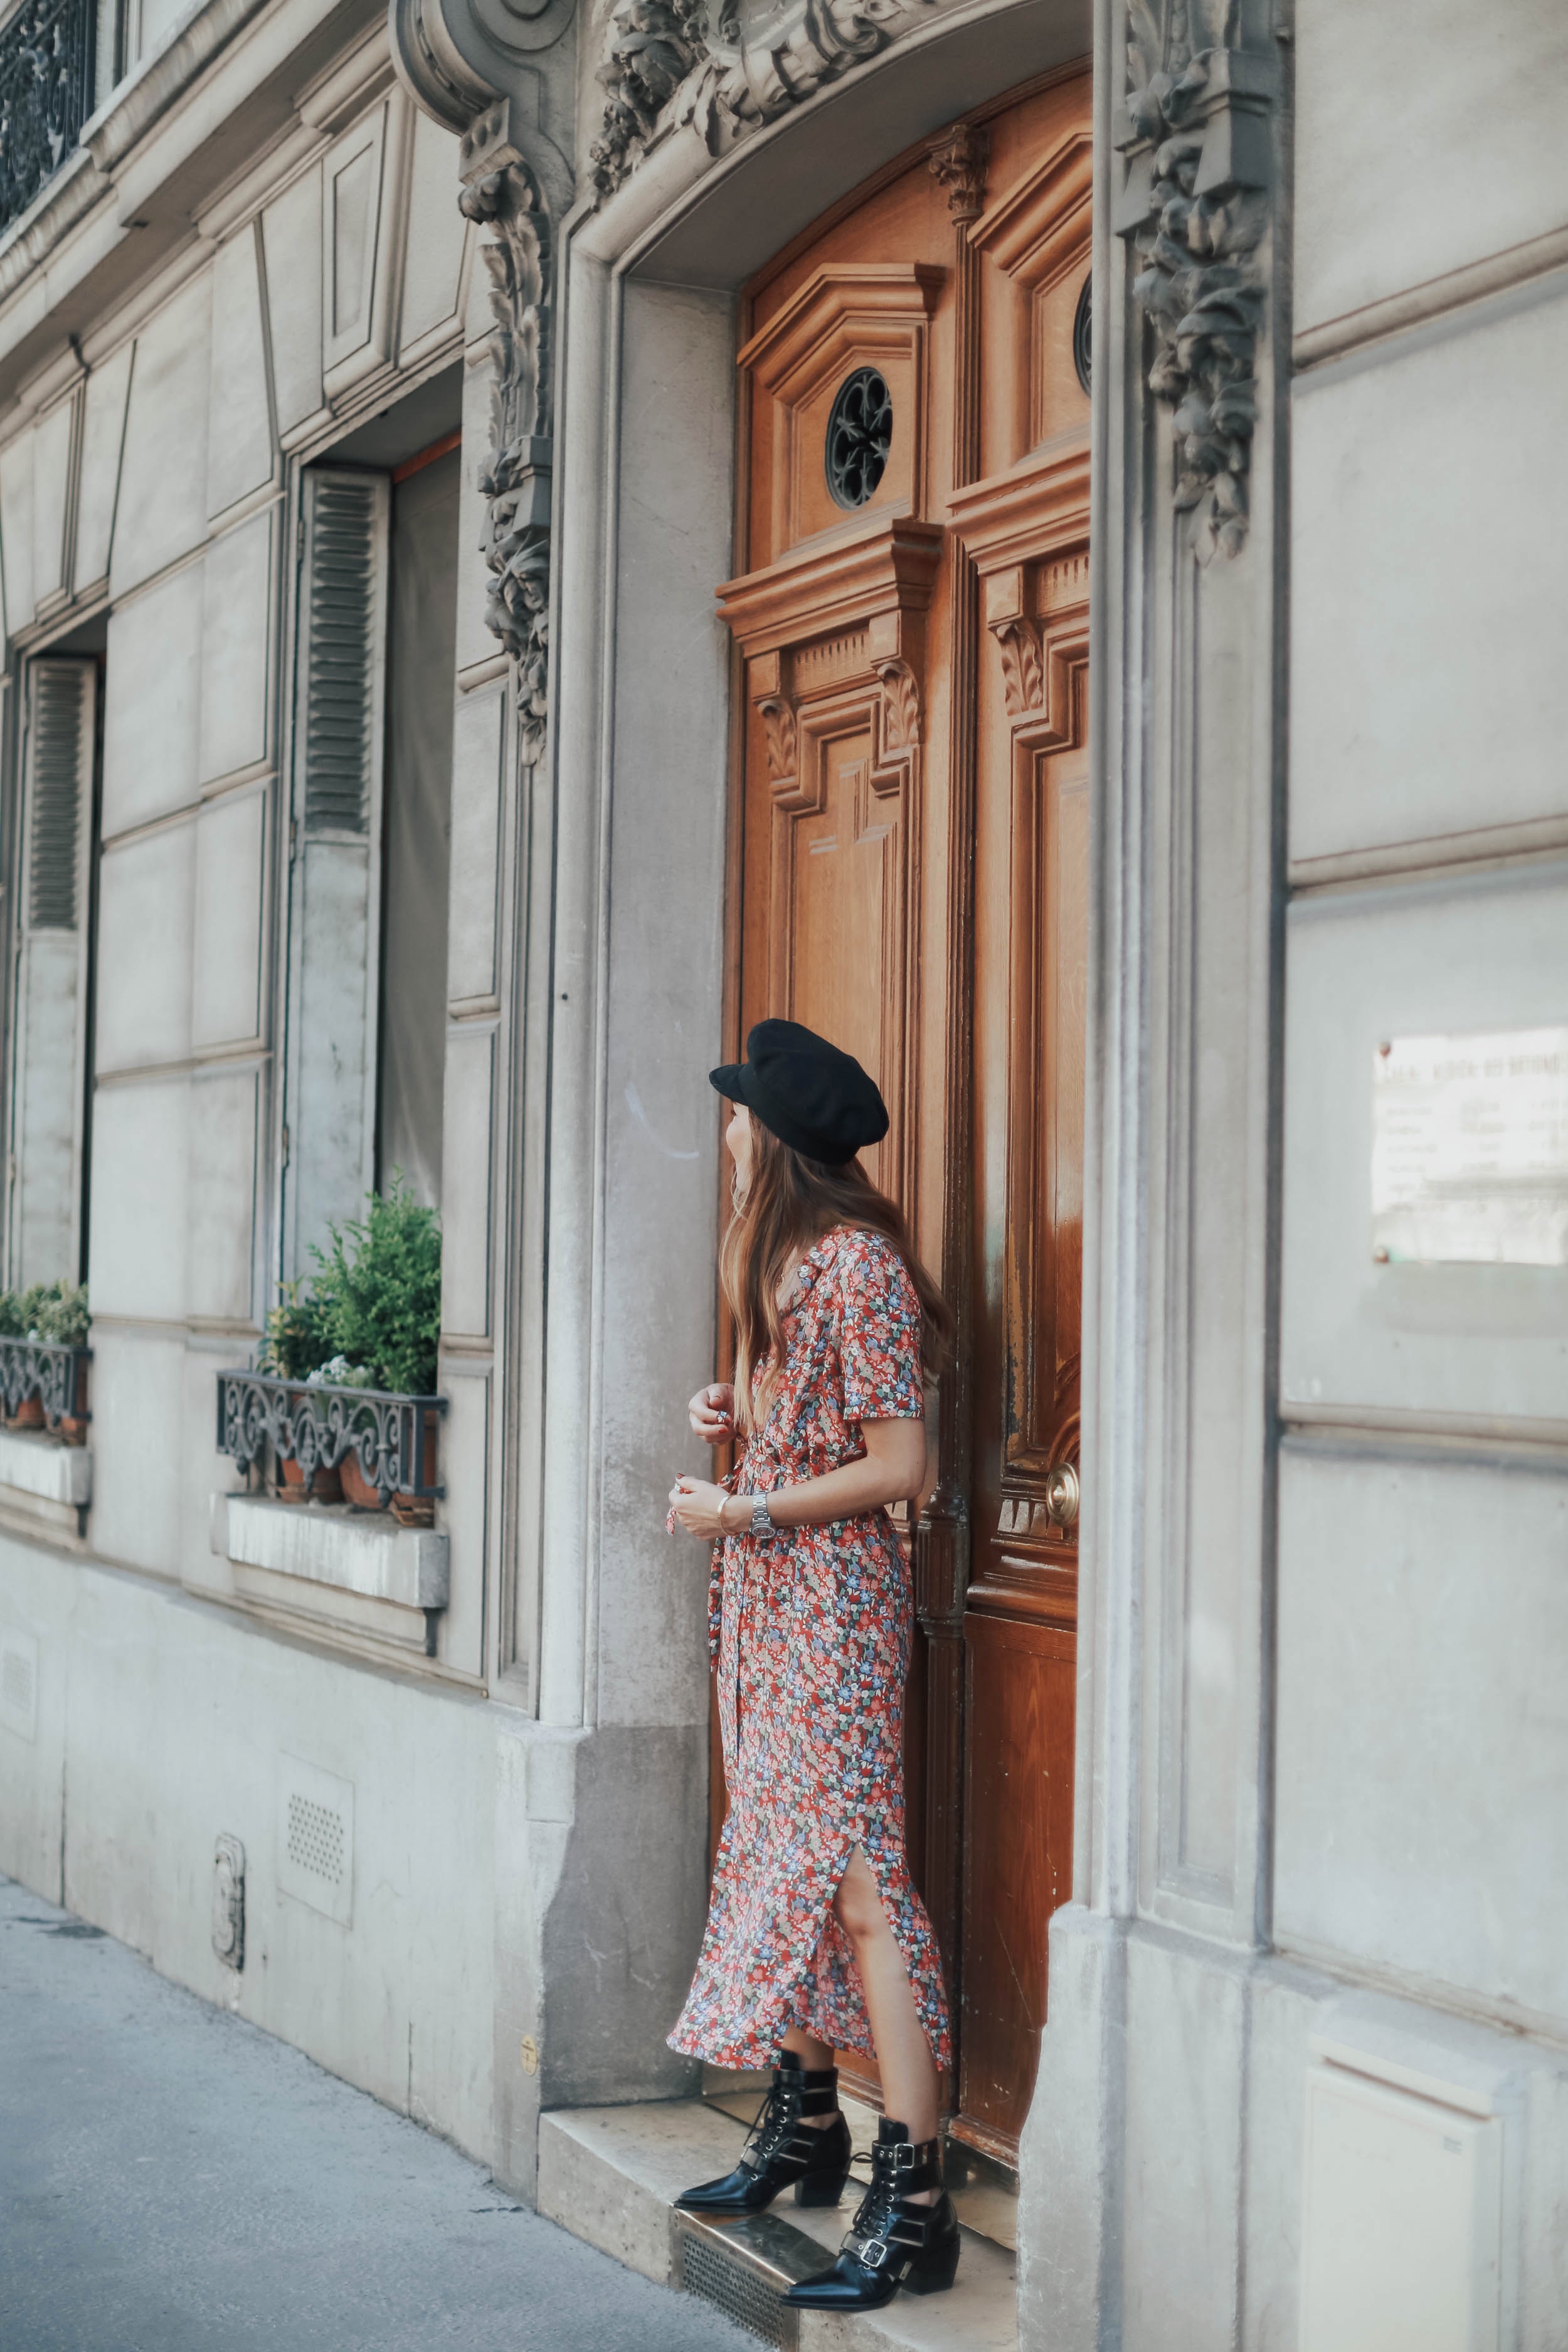 SPRING DRESS IN PARIS